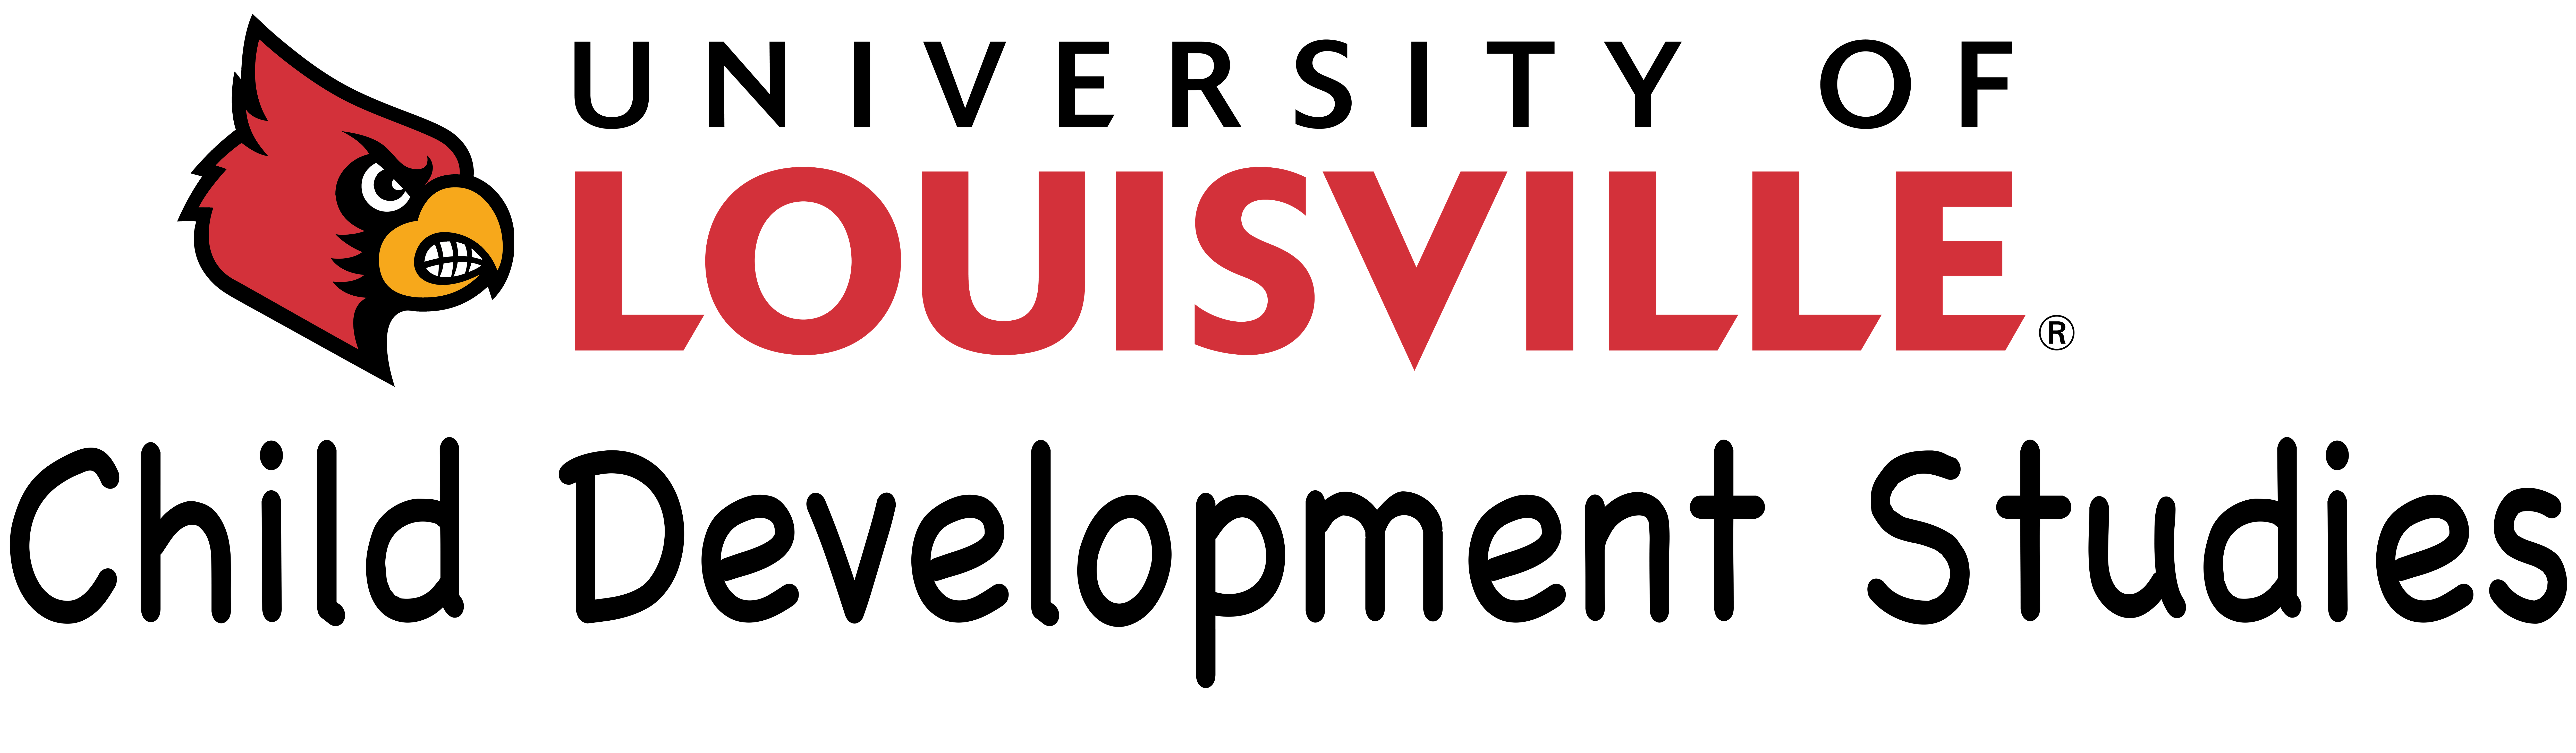 University of Louisville Cardinal Logo, Child Development Studies